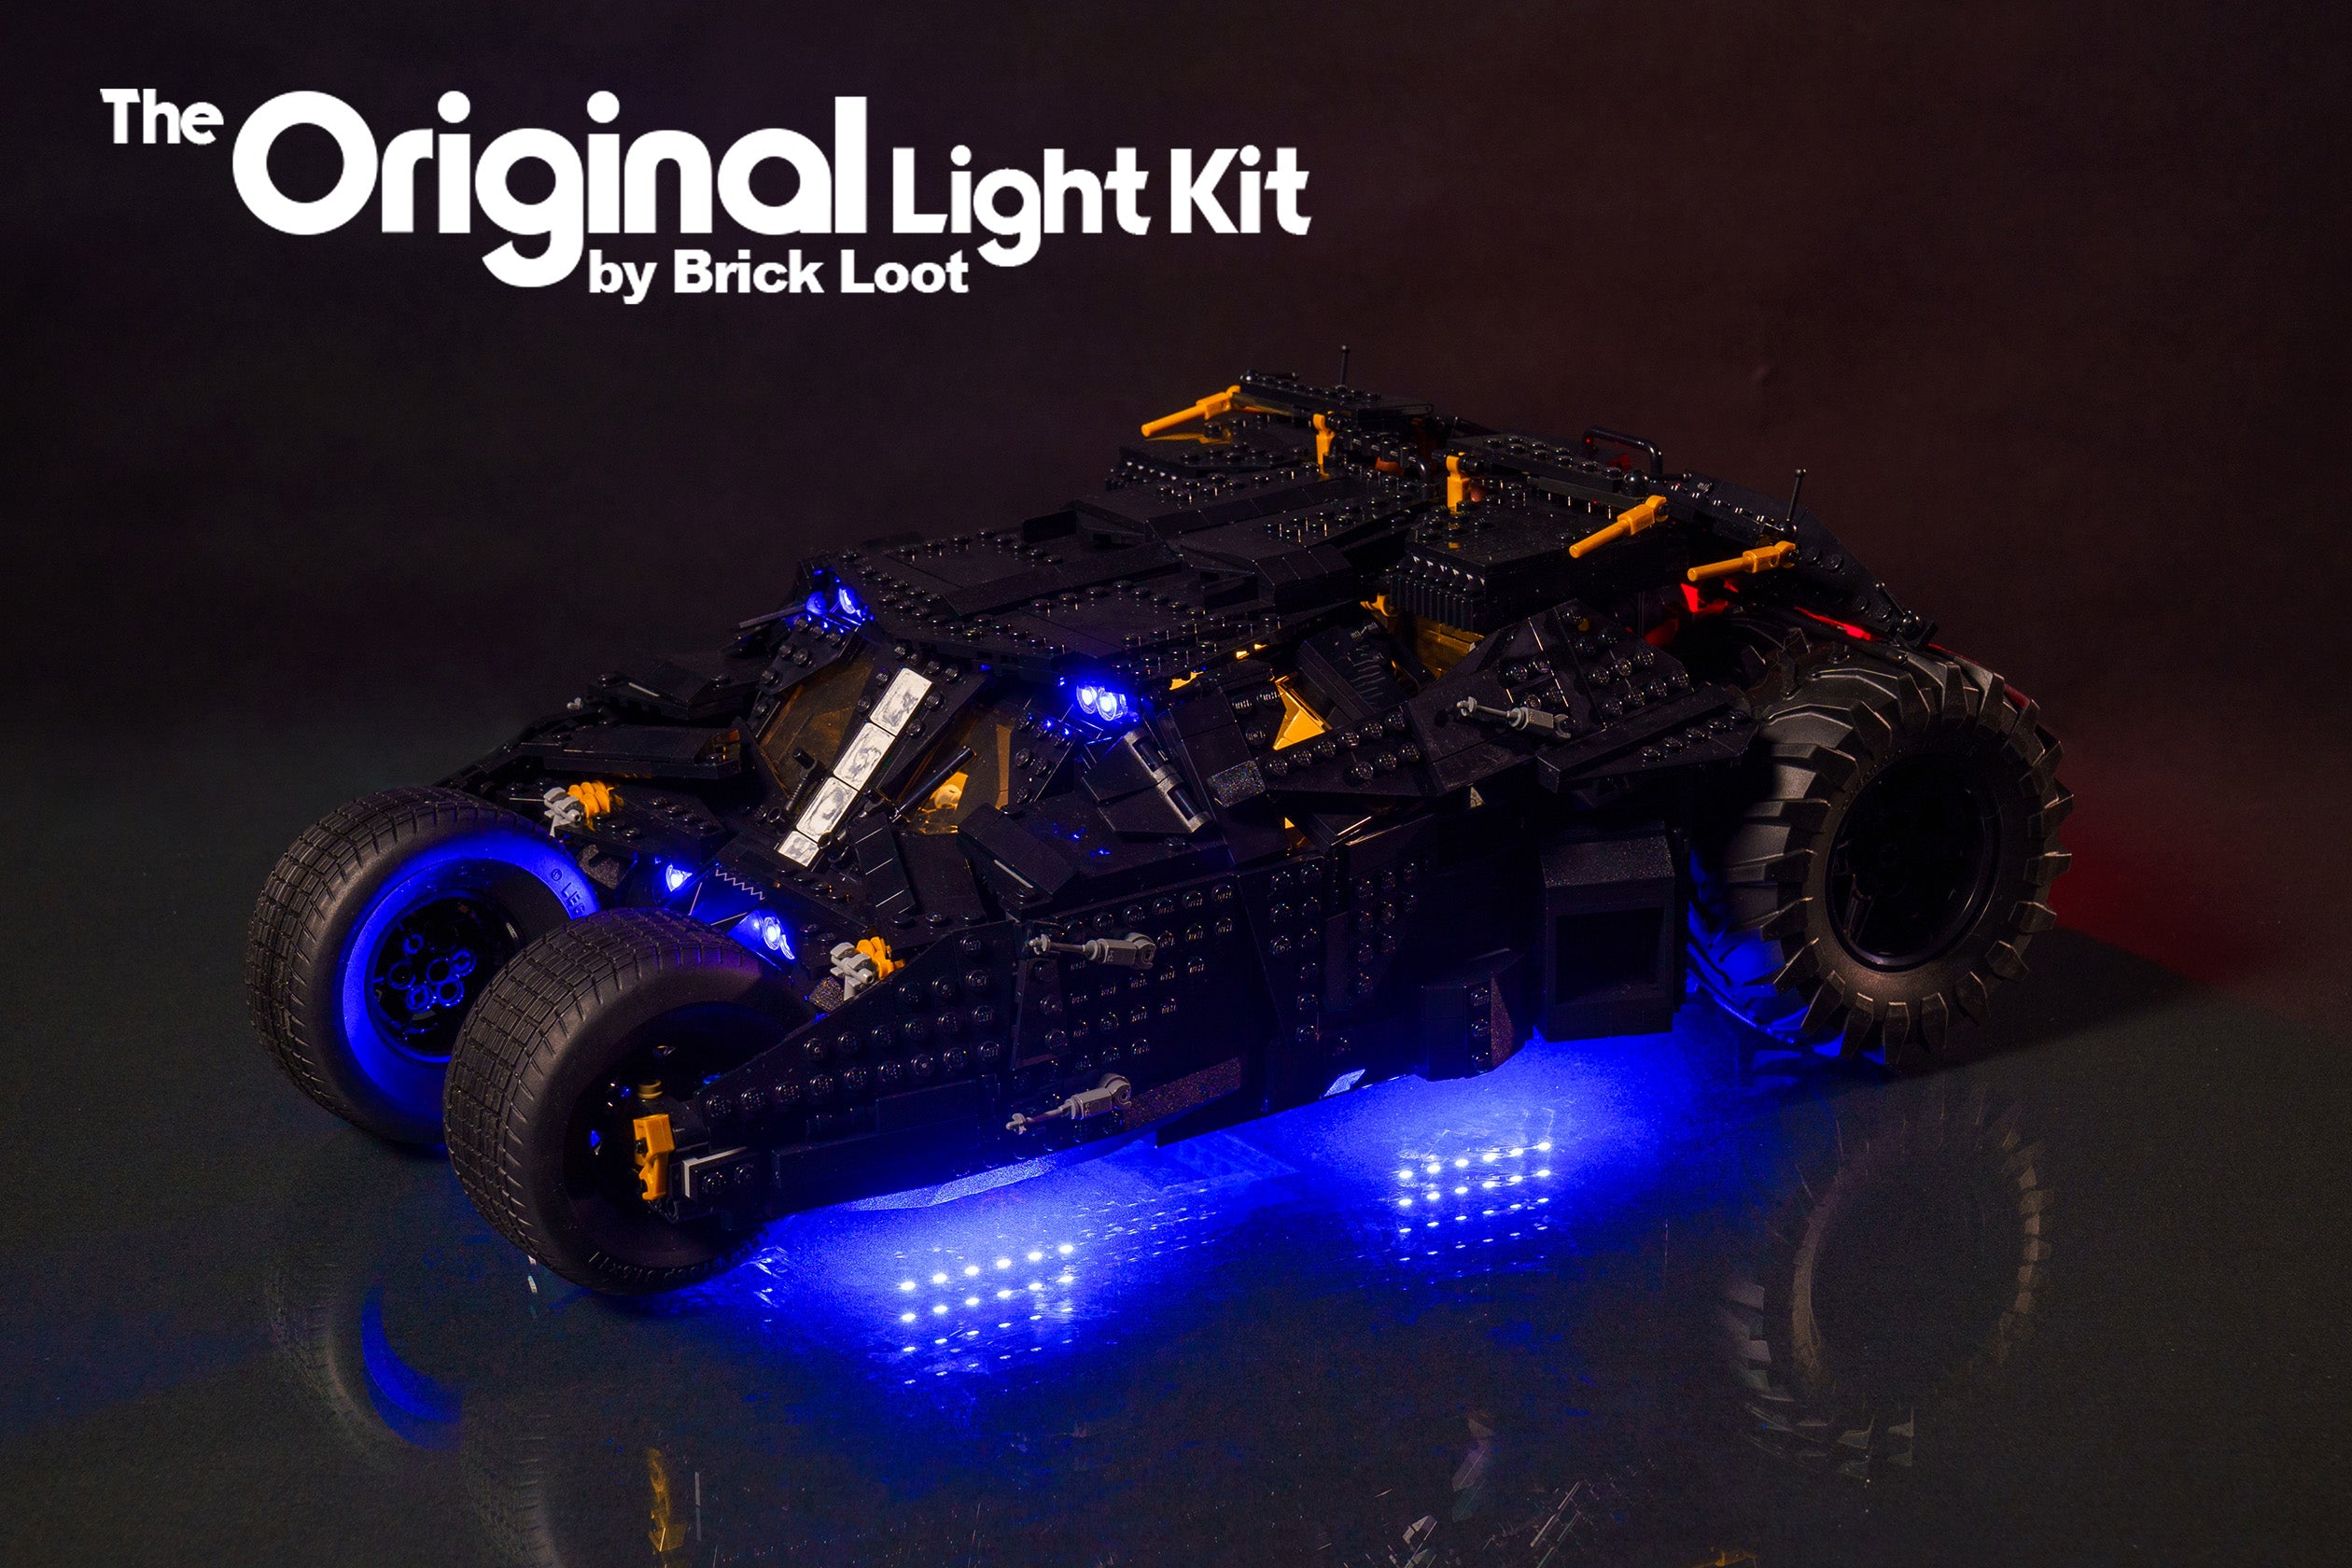 Power Functions Kit for LEGO DC Batman Batmobile Tumbler #76240 RC